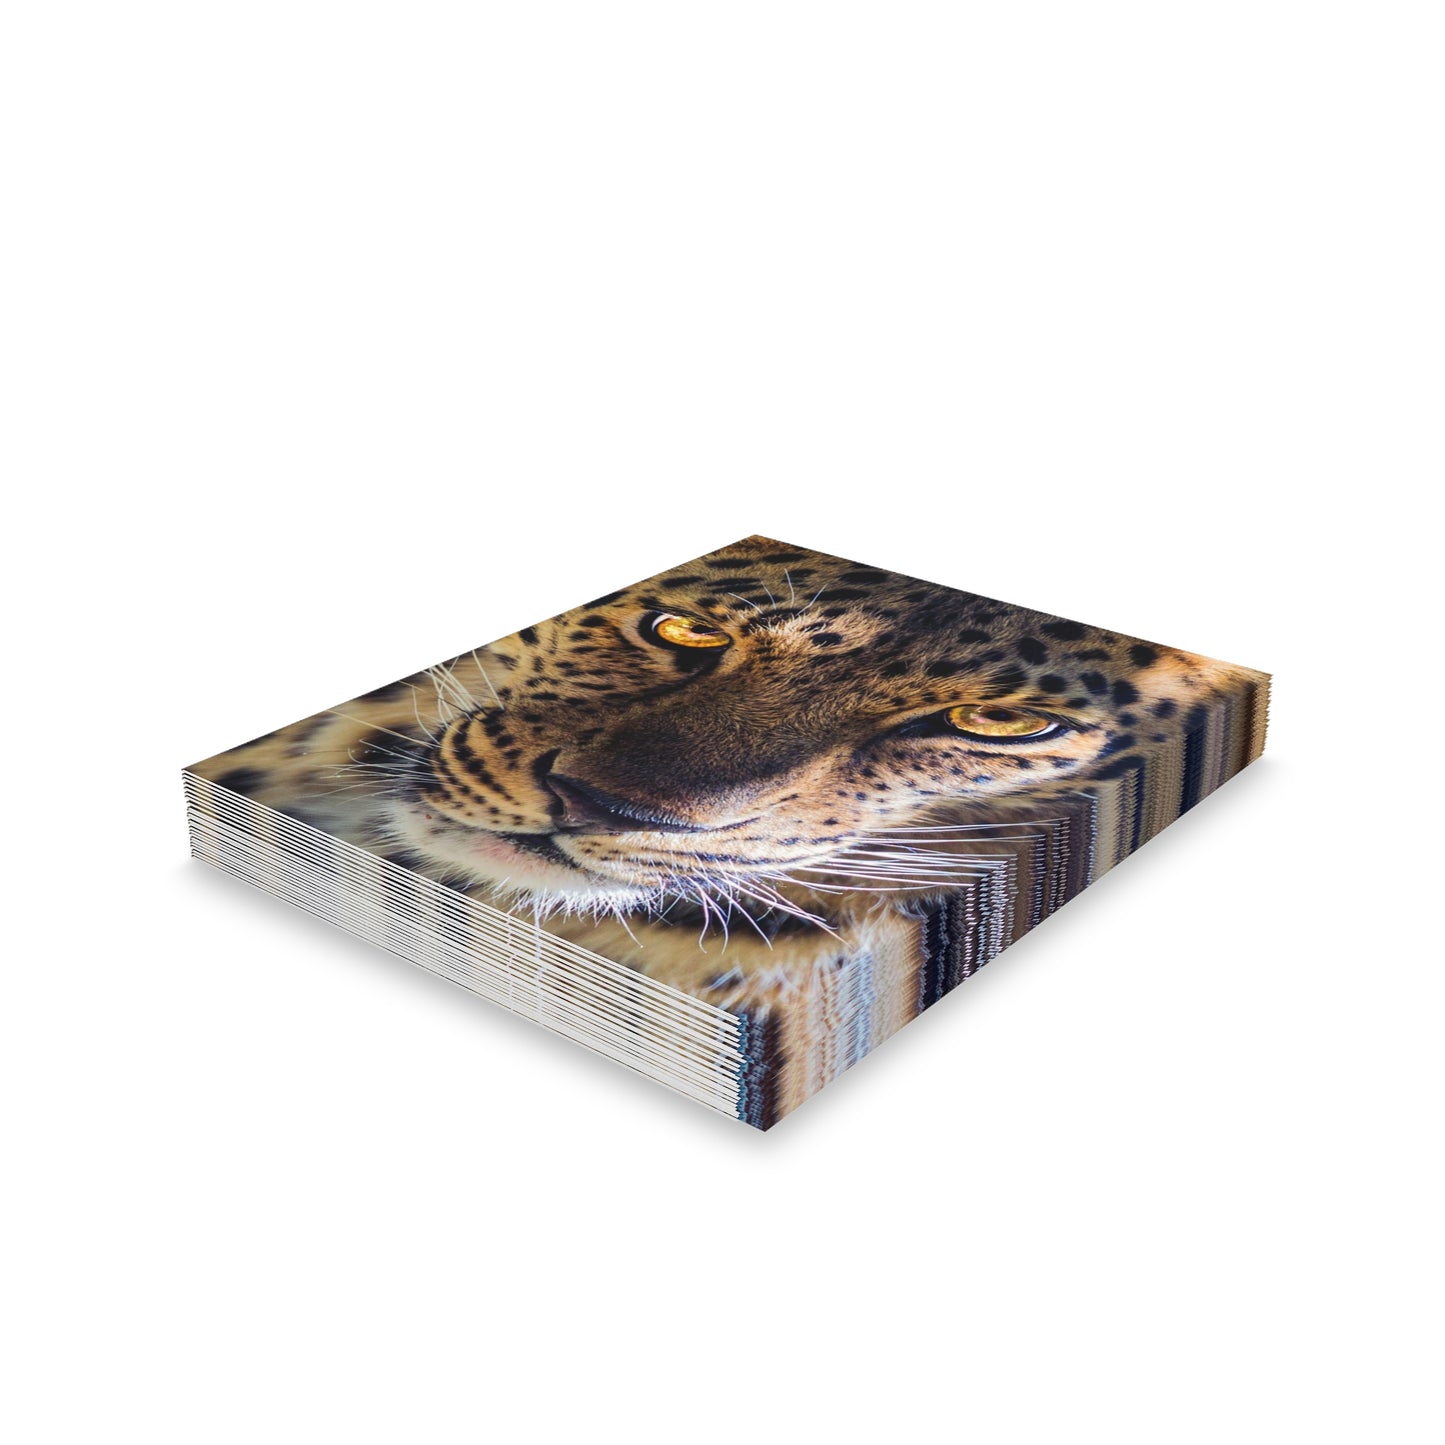 Jaguar Animal Print Greeting Cards